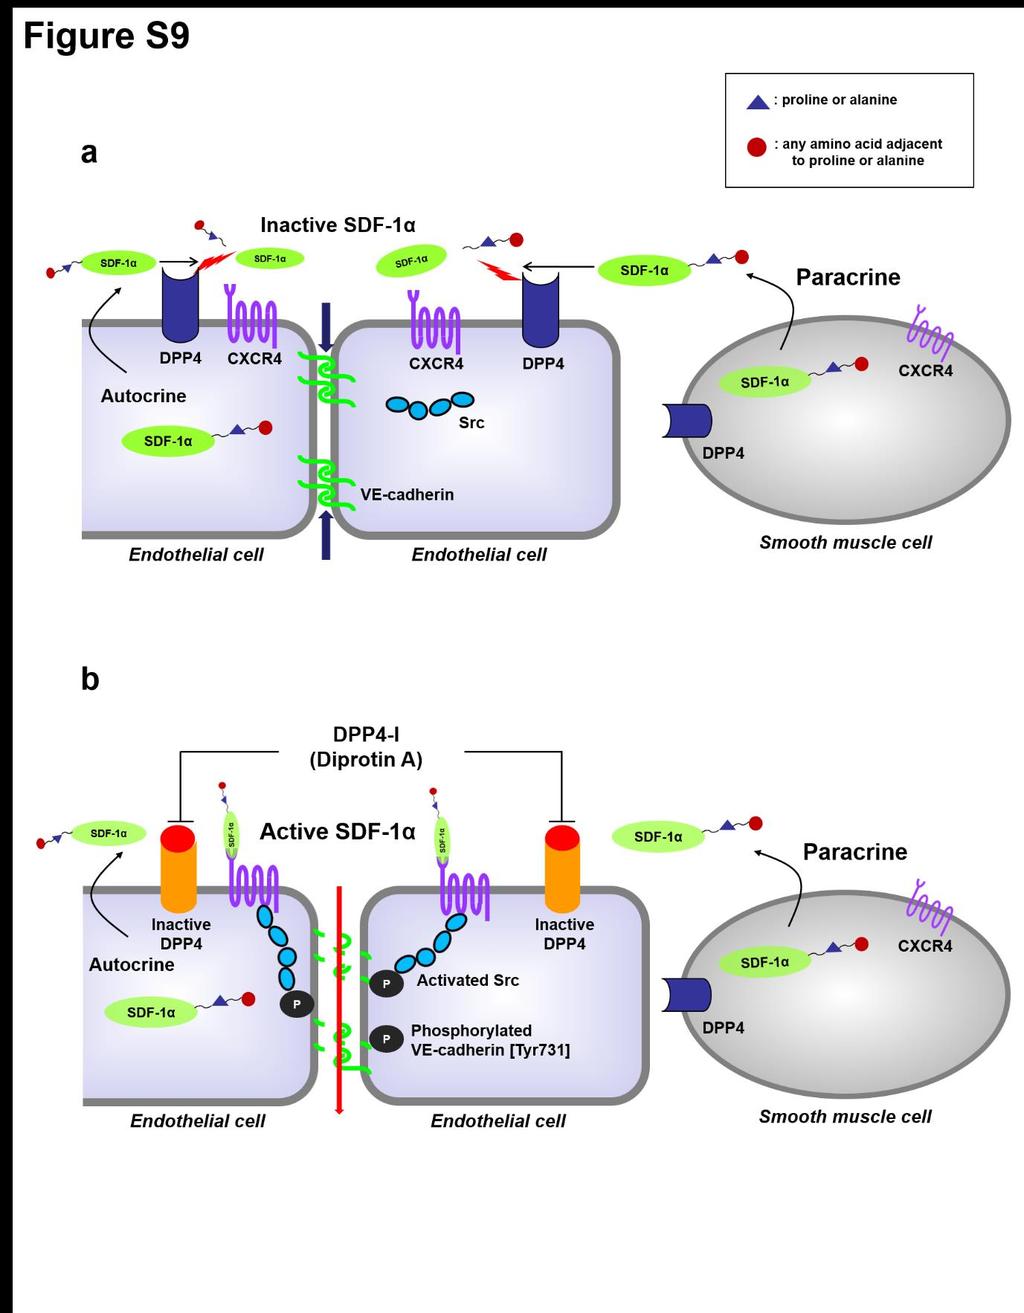 Figure S9. Schemes of how DPP4-inhibitors induce vascular leakage.